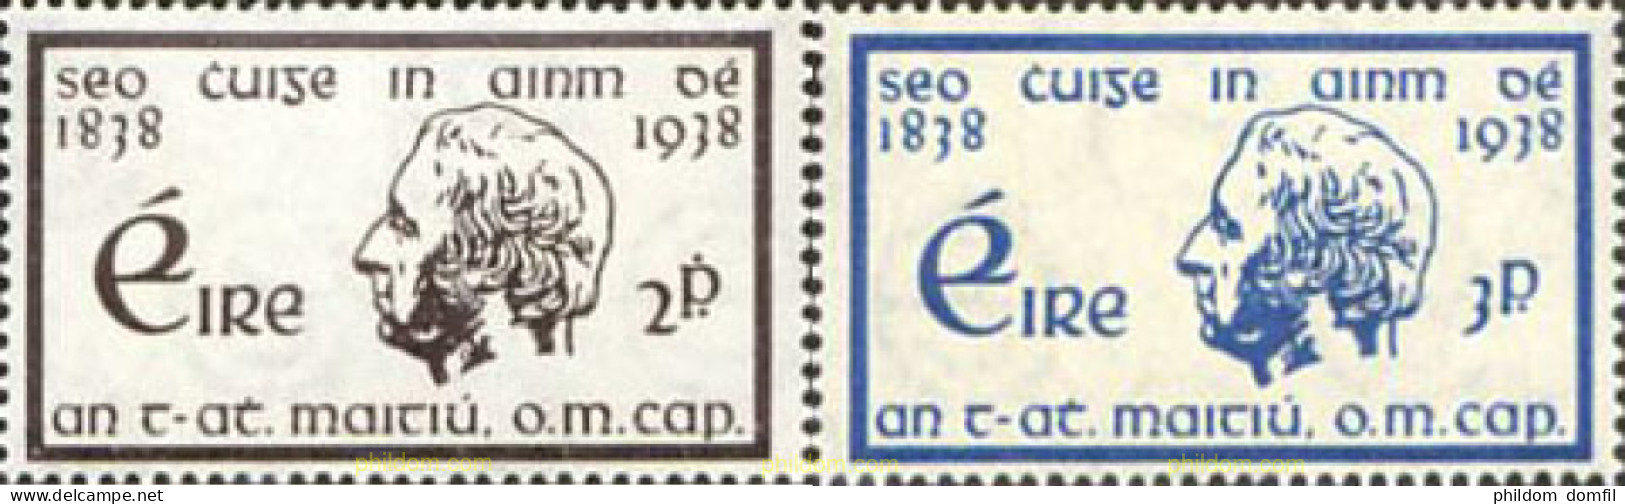 164357 MNH IRLANDA 1938 CENTENARIO DE LA CRUZADA DEL PADRE MATHEW - Unused Stamps